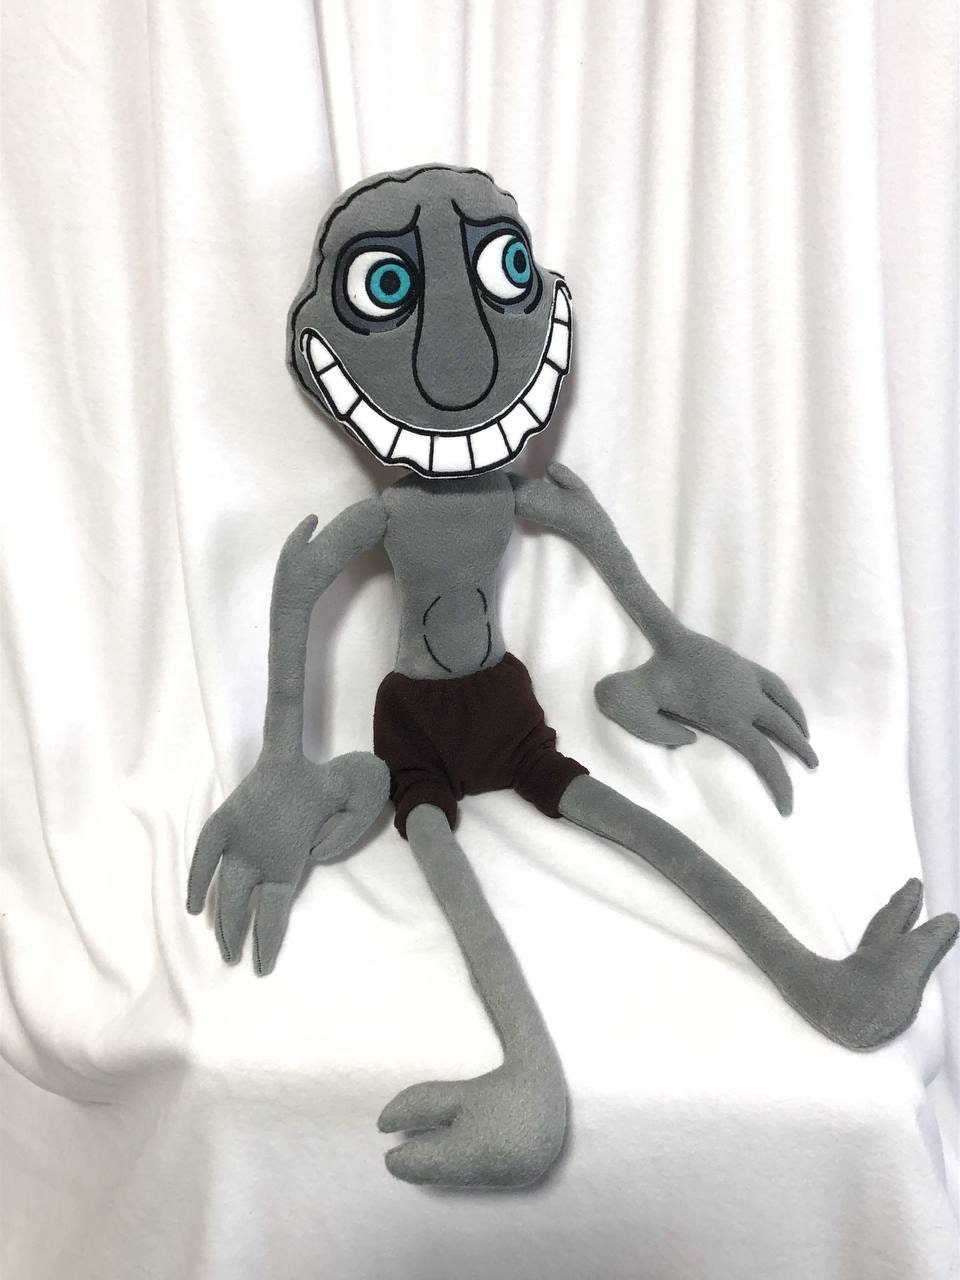 Man From the Window Plush Horror Plush Monster Plush Creepy 